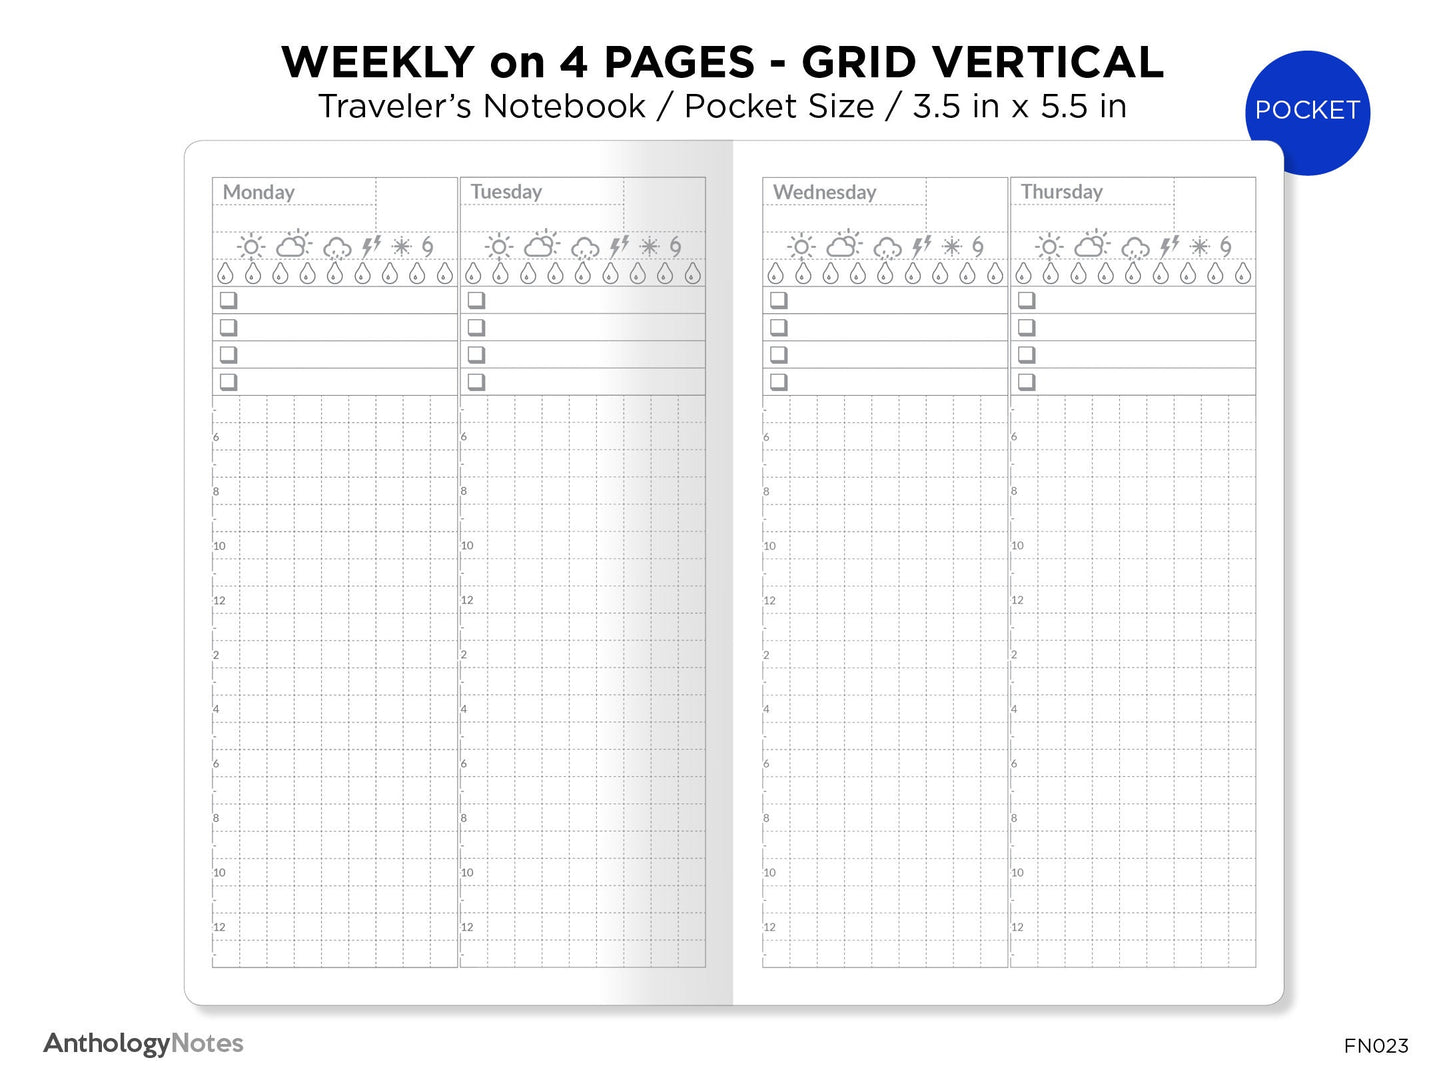 TN POCKET Weekly View Wo4P Printable Insert Traveler's Notebook Tracker Minimalist Vertical GRID